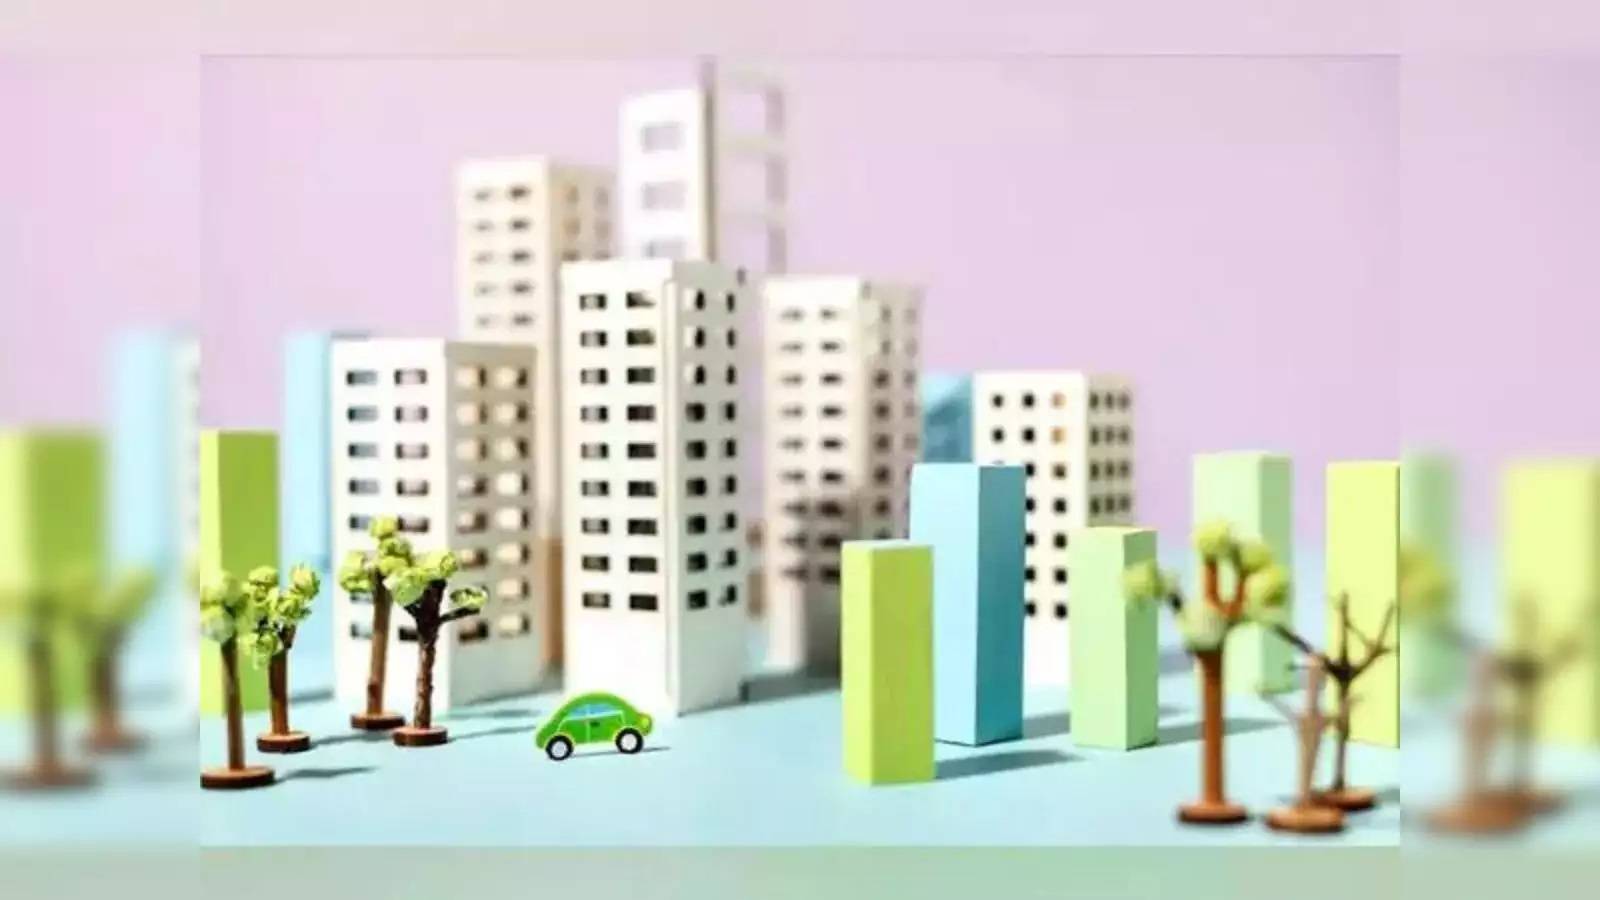 Max Estates to Develop 4 Million Sq Ft in Gurgaon, Targets Rs 9,000 Crore Revenue